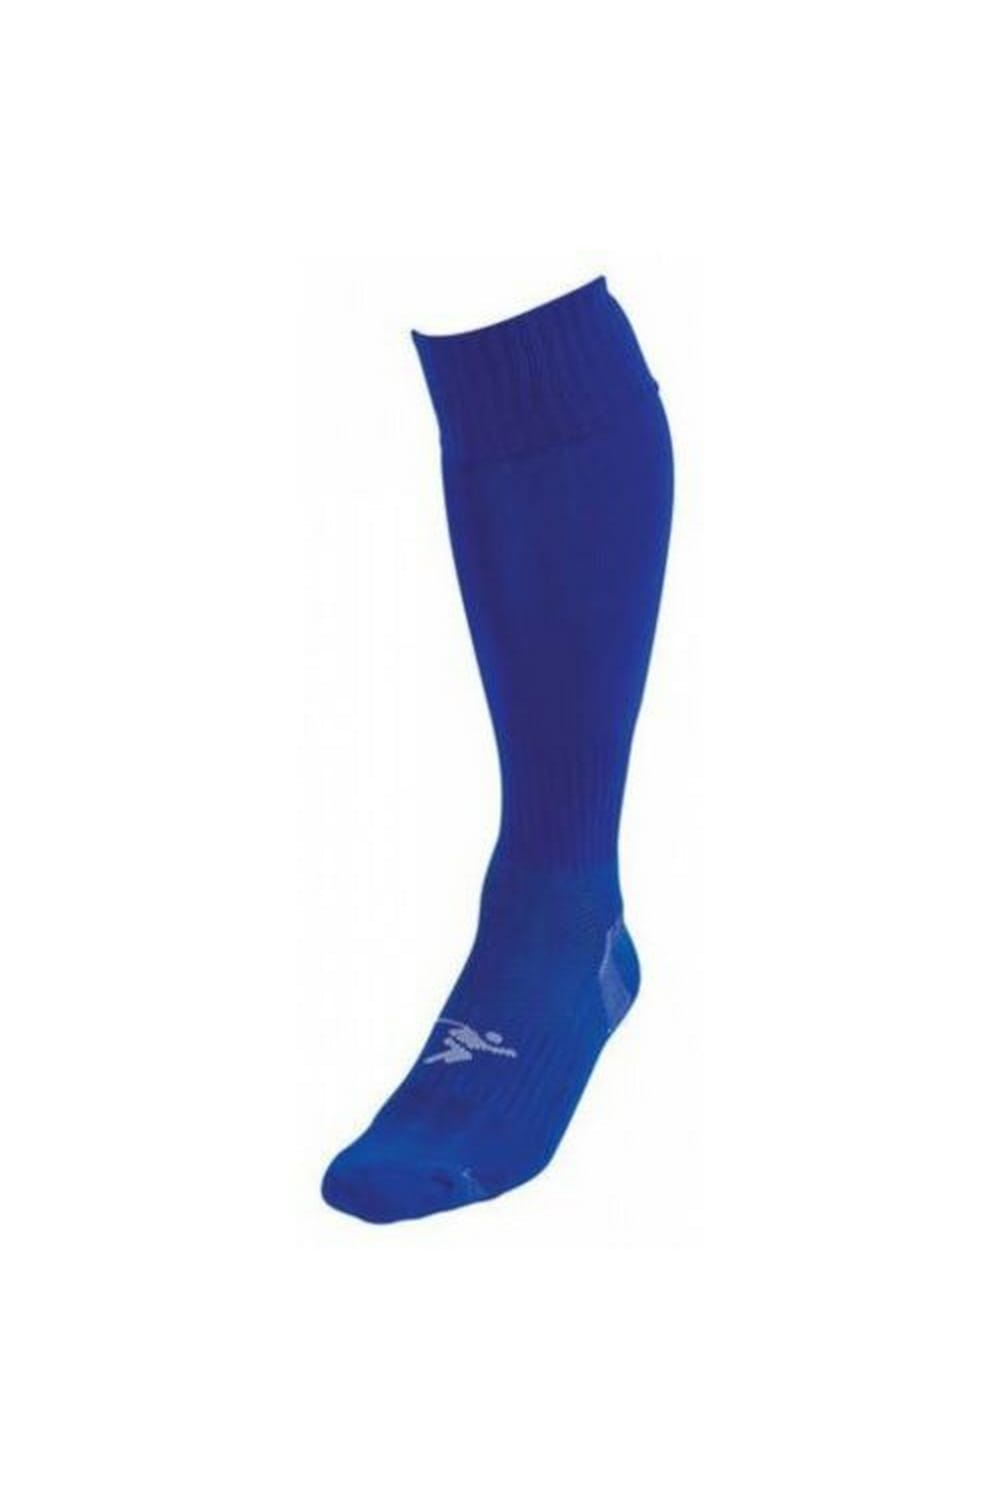 Precision Unisex Adult Pro Plain Football Socks (Royal Blue)